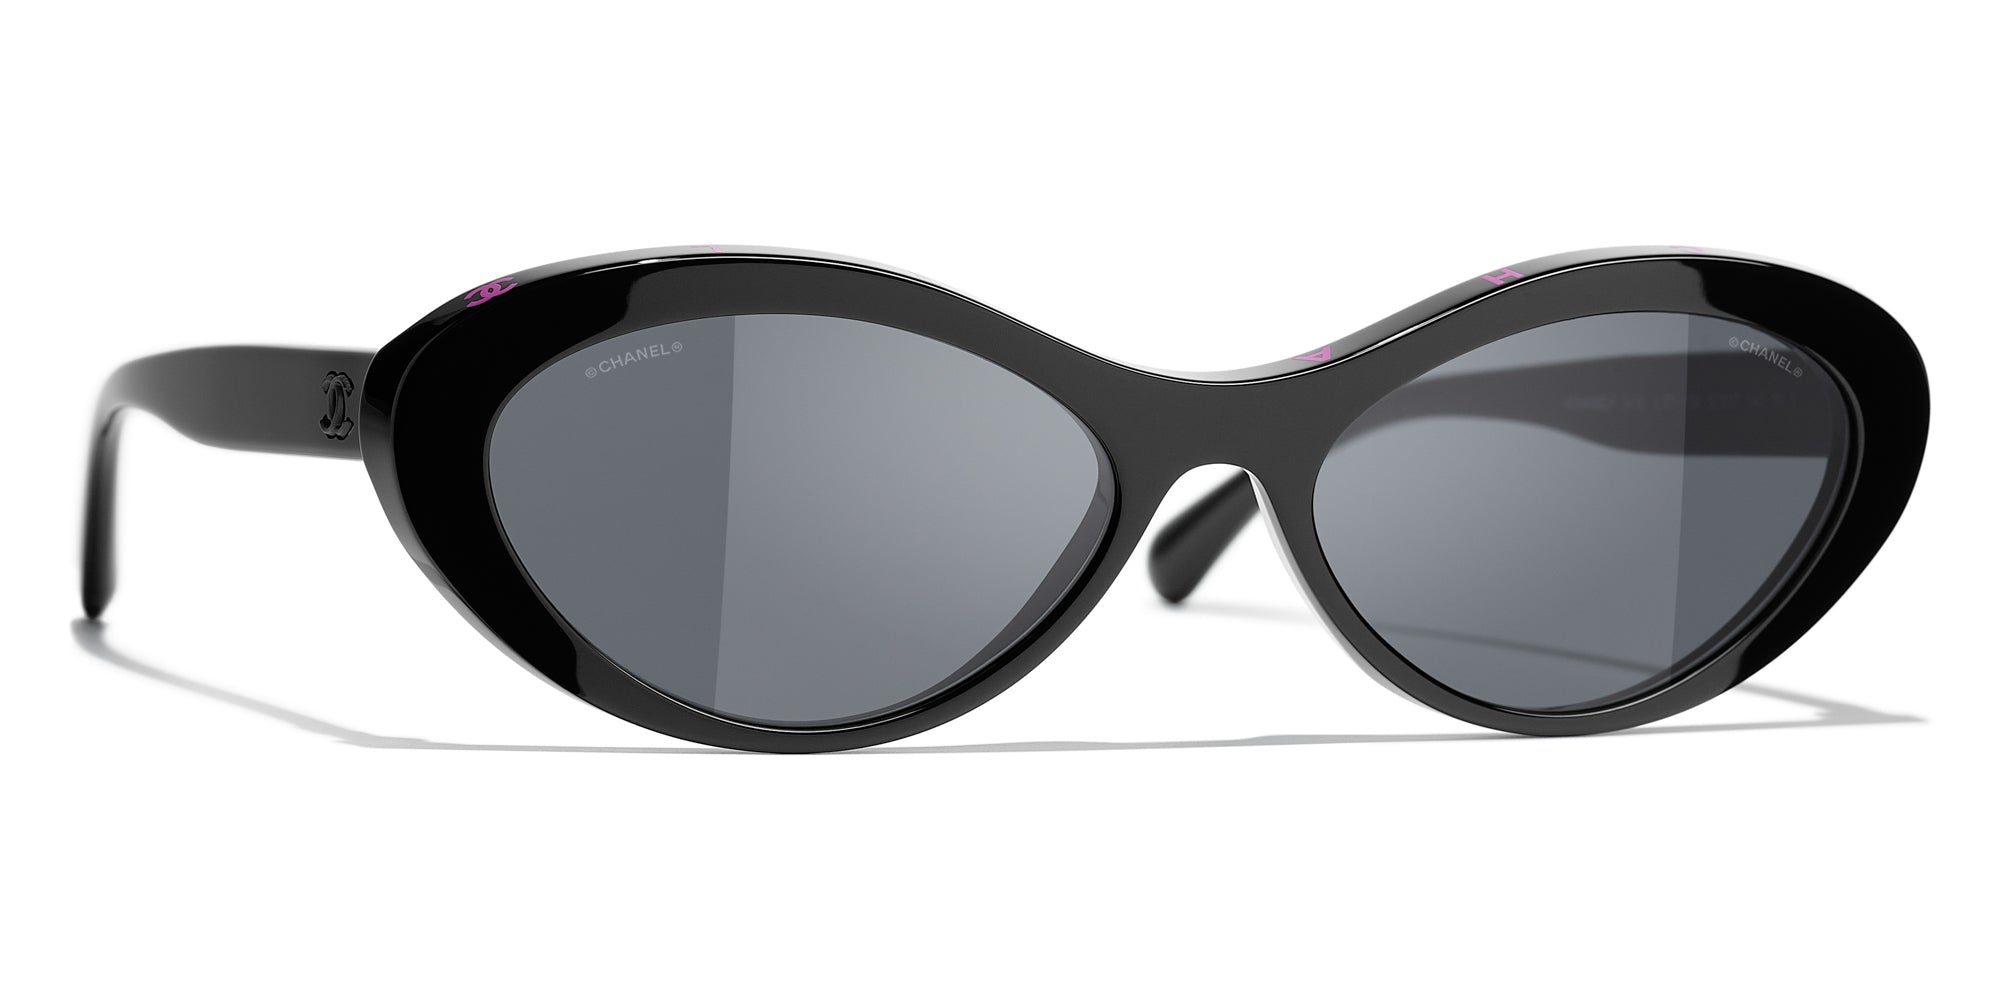 oval sunglasses chanel women